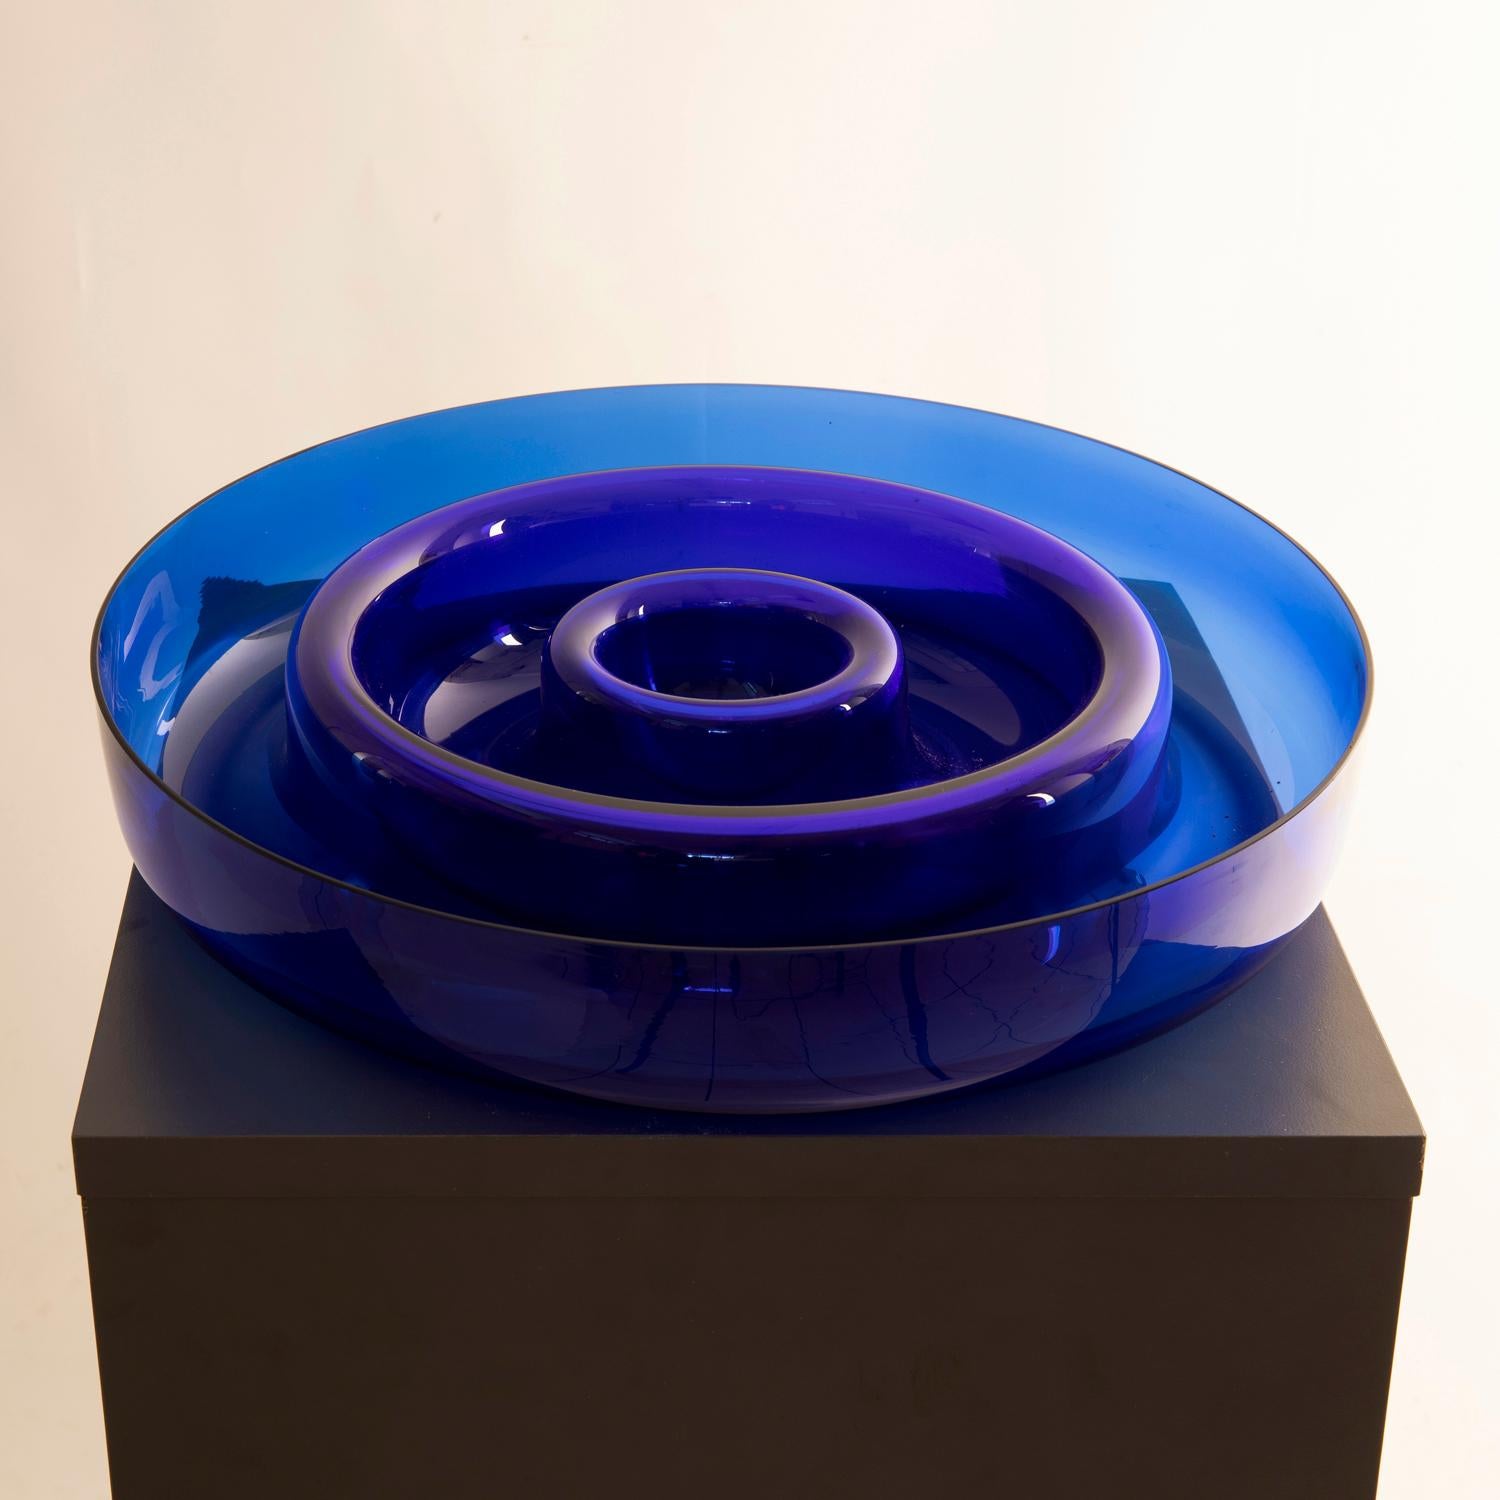 Vistosi Mod 642 bis, cobalt blue centrepiece in Murano glass. Designed by Centro Stile Vistosi in 1974.